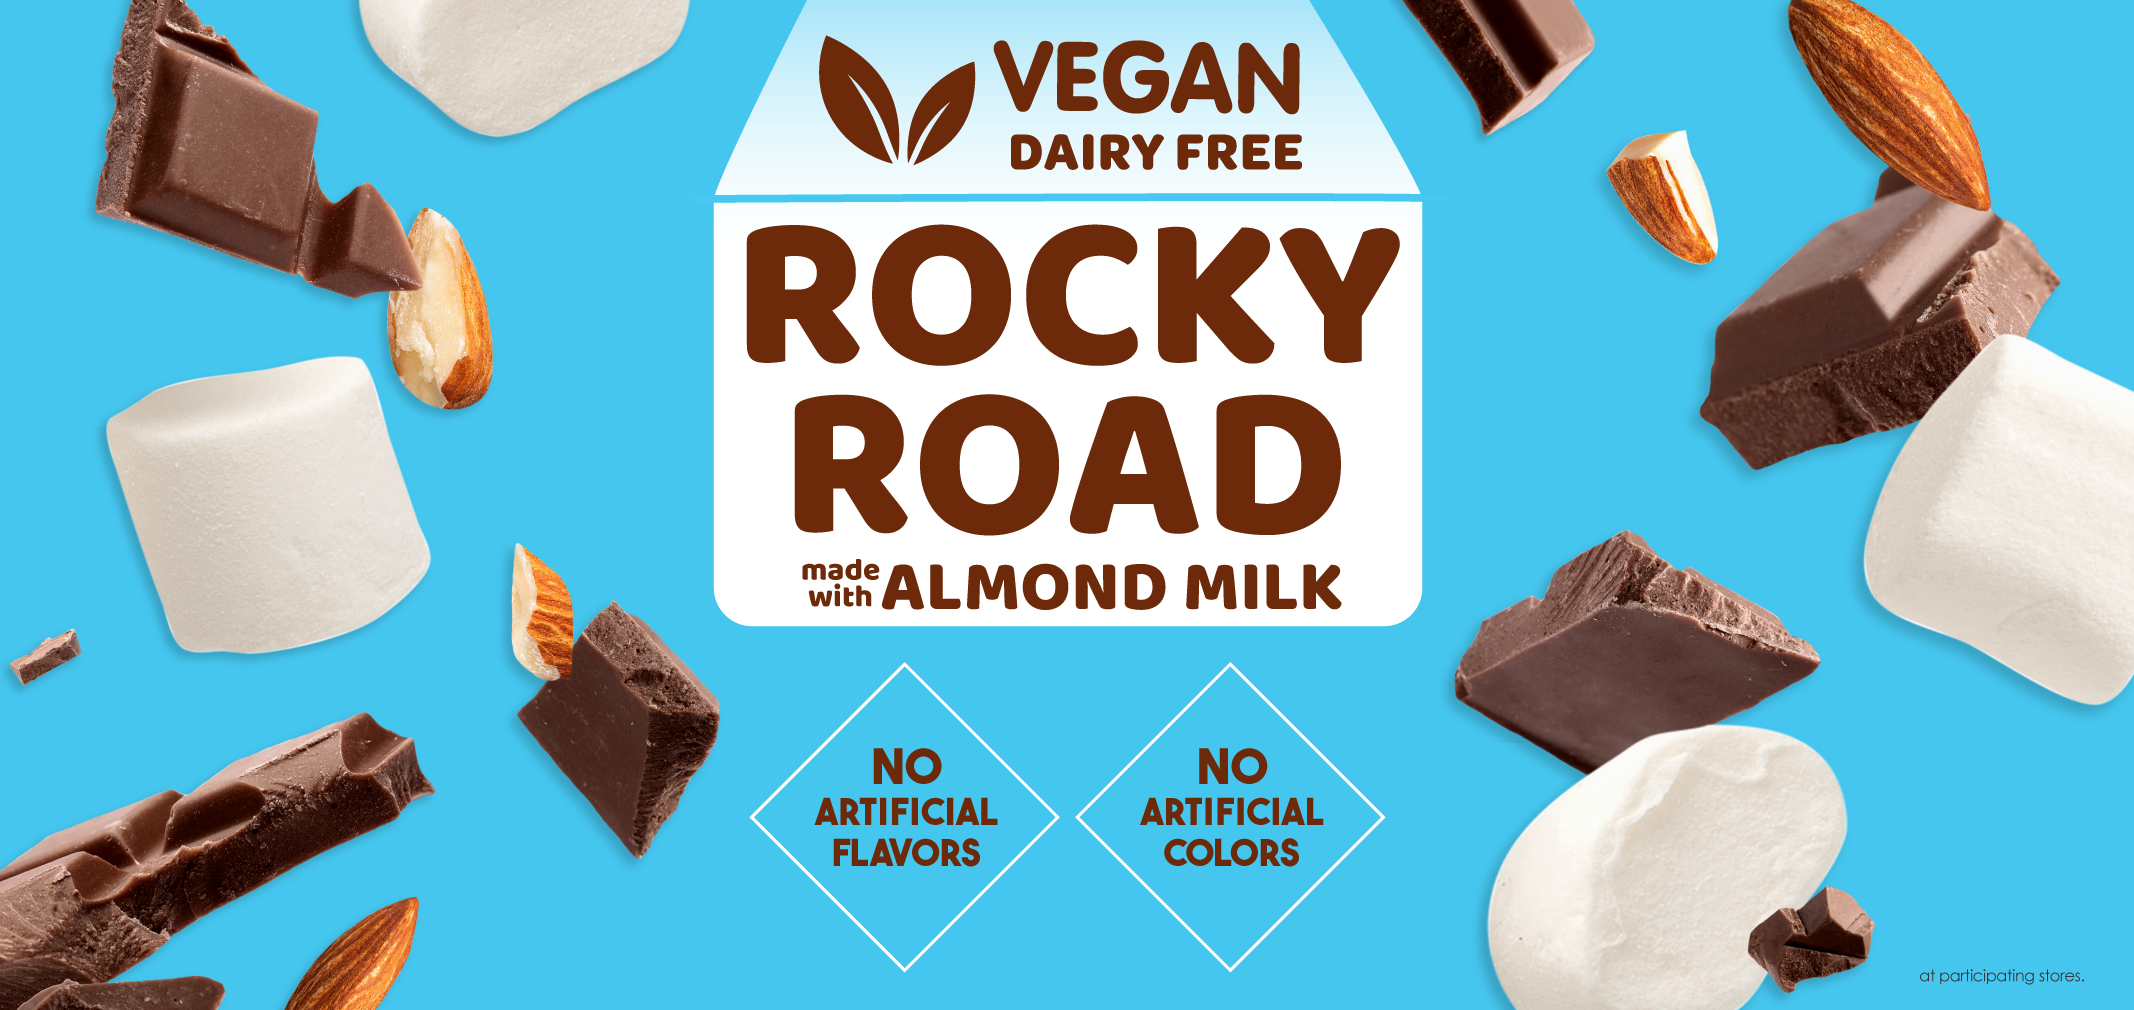 Vegan Rocky Road label image